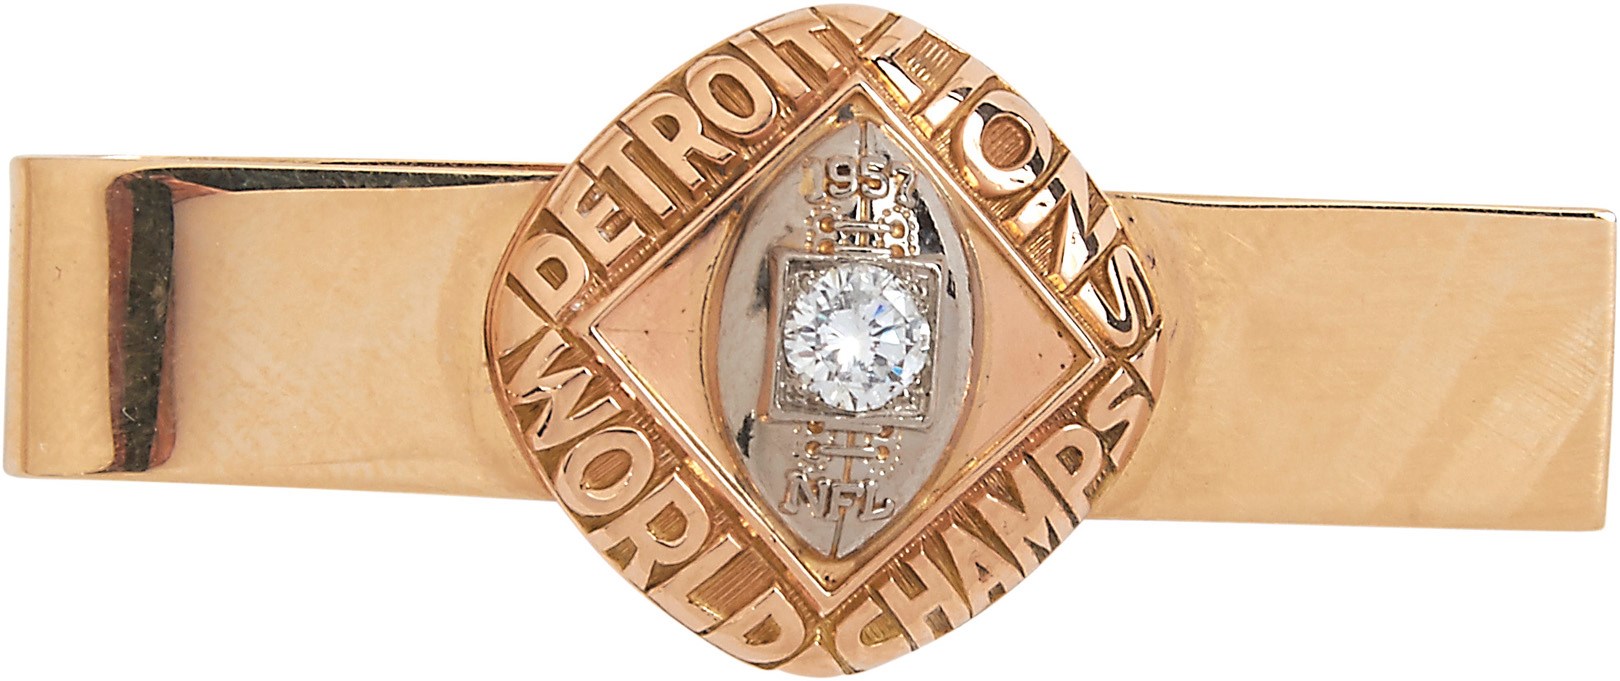 Football - 1957 Detroit Lions World Championship Tie-Bar